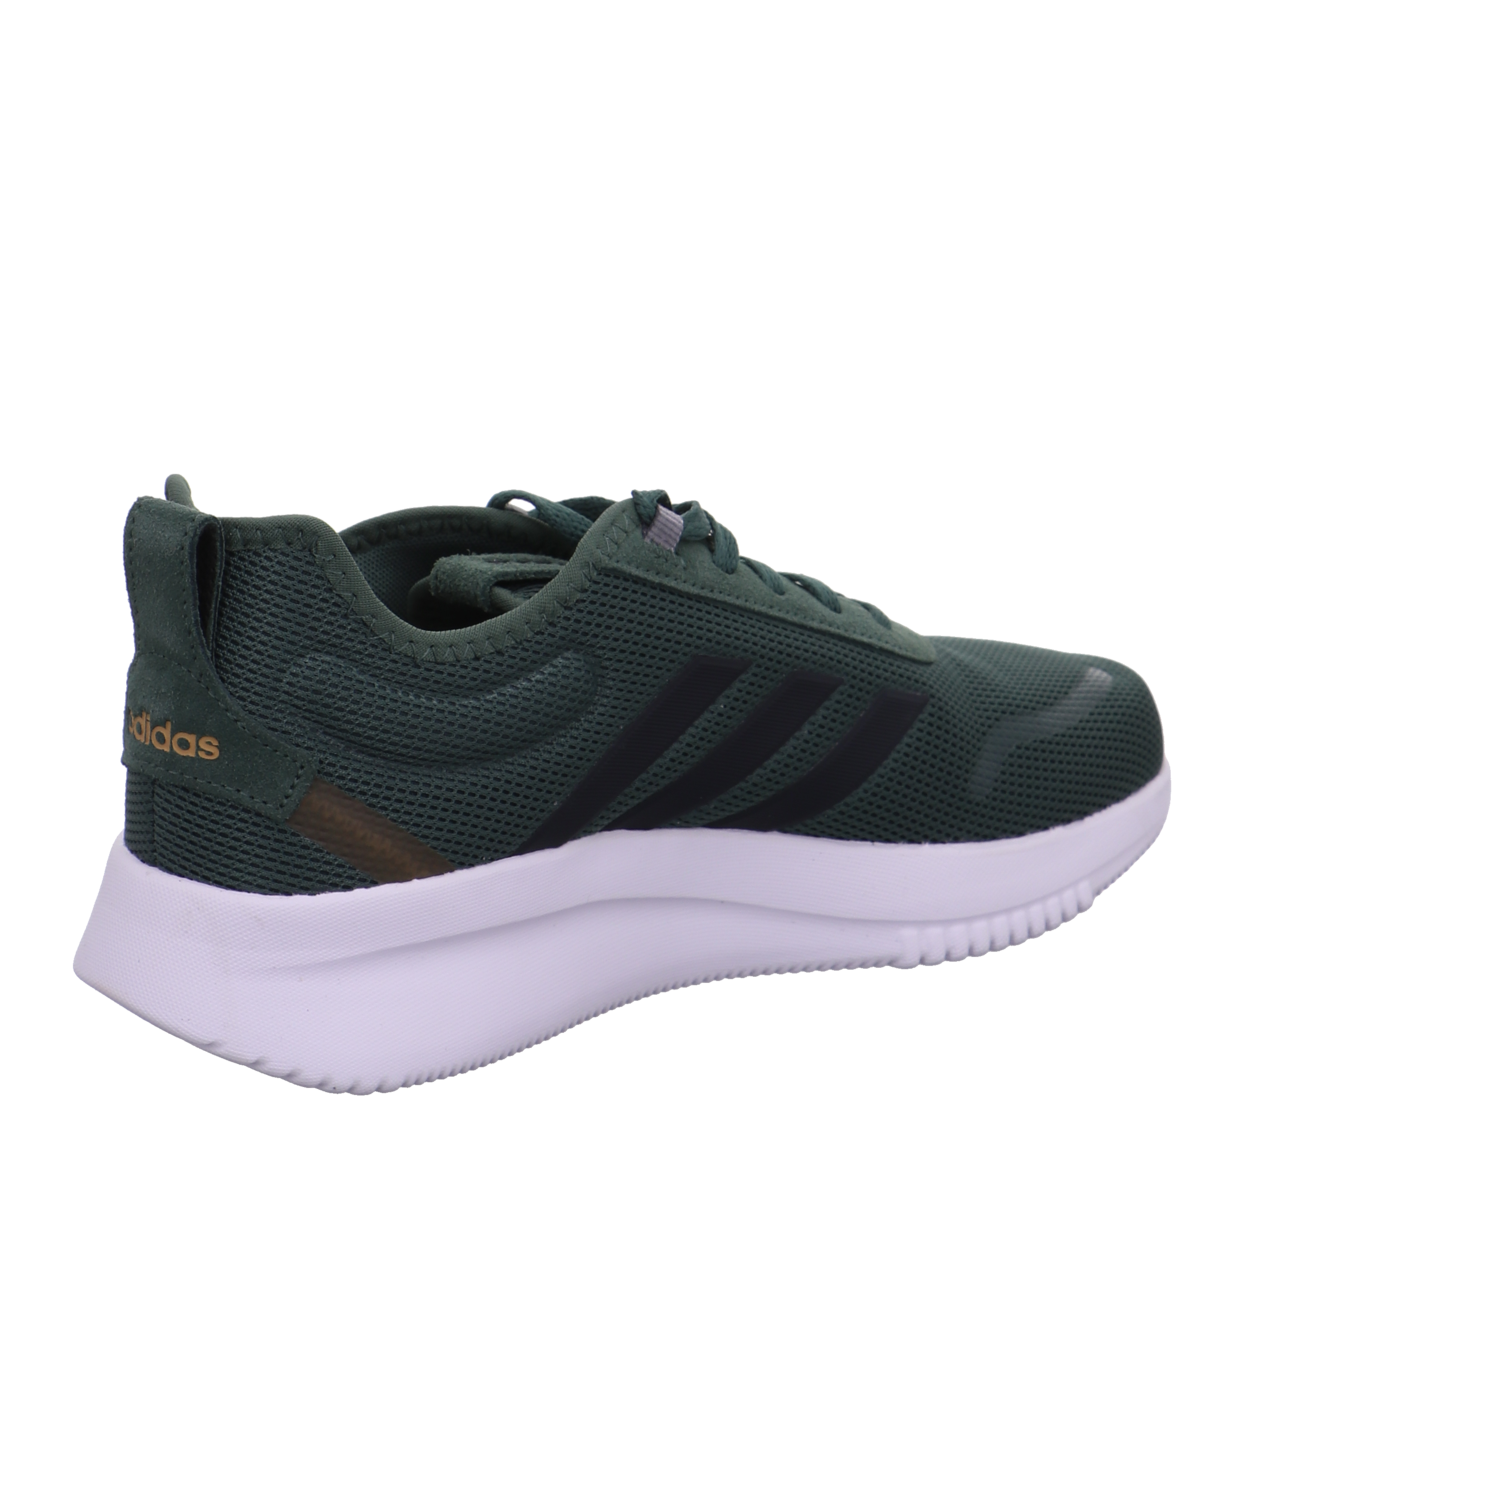 Adidas Sneaker grün kombi Bild5